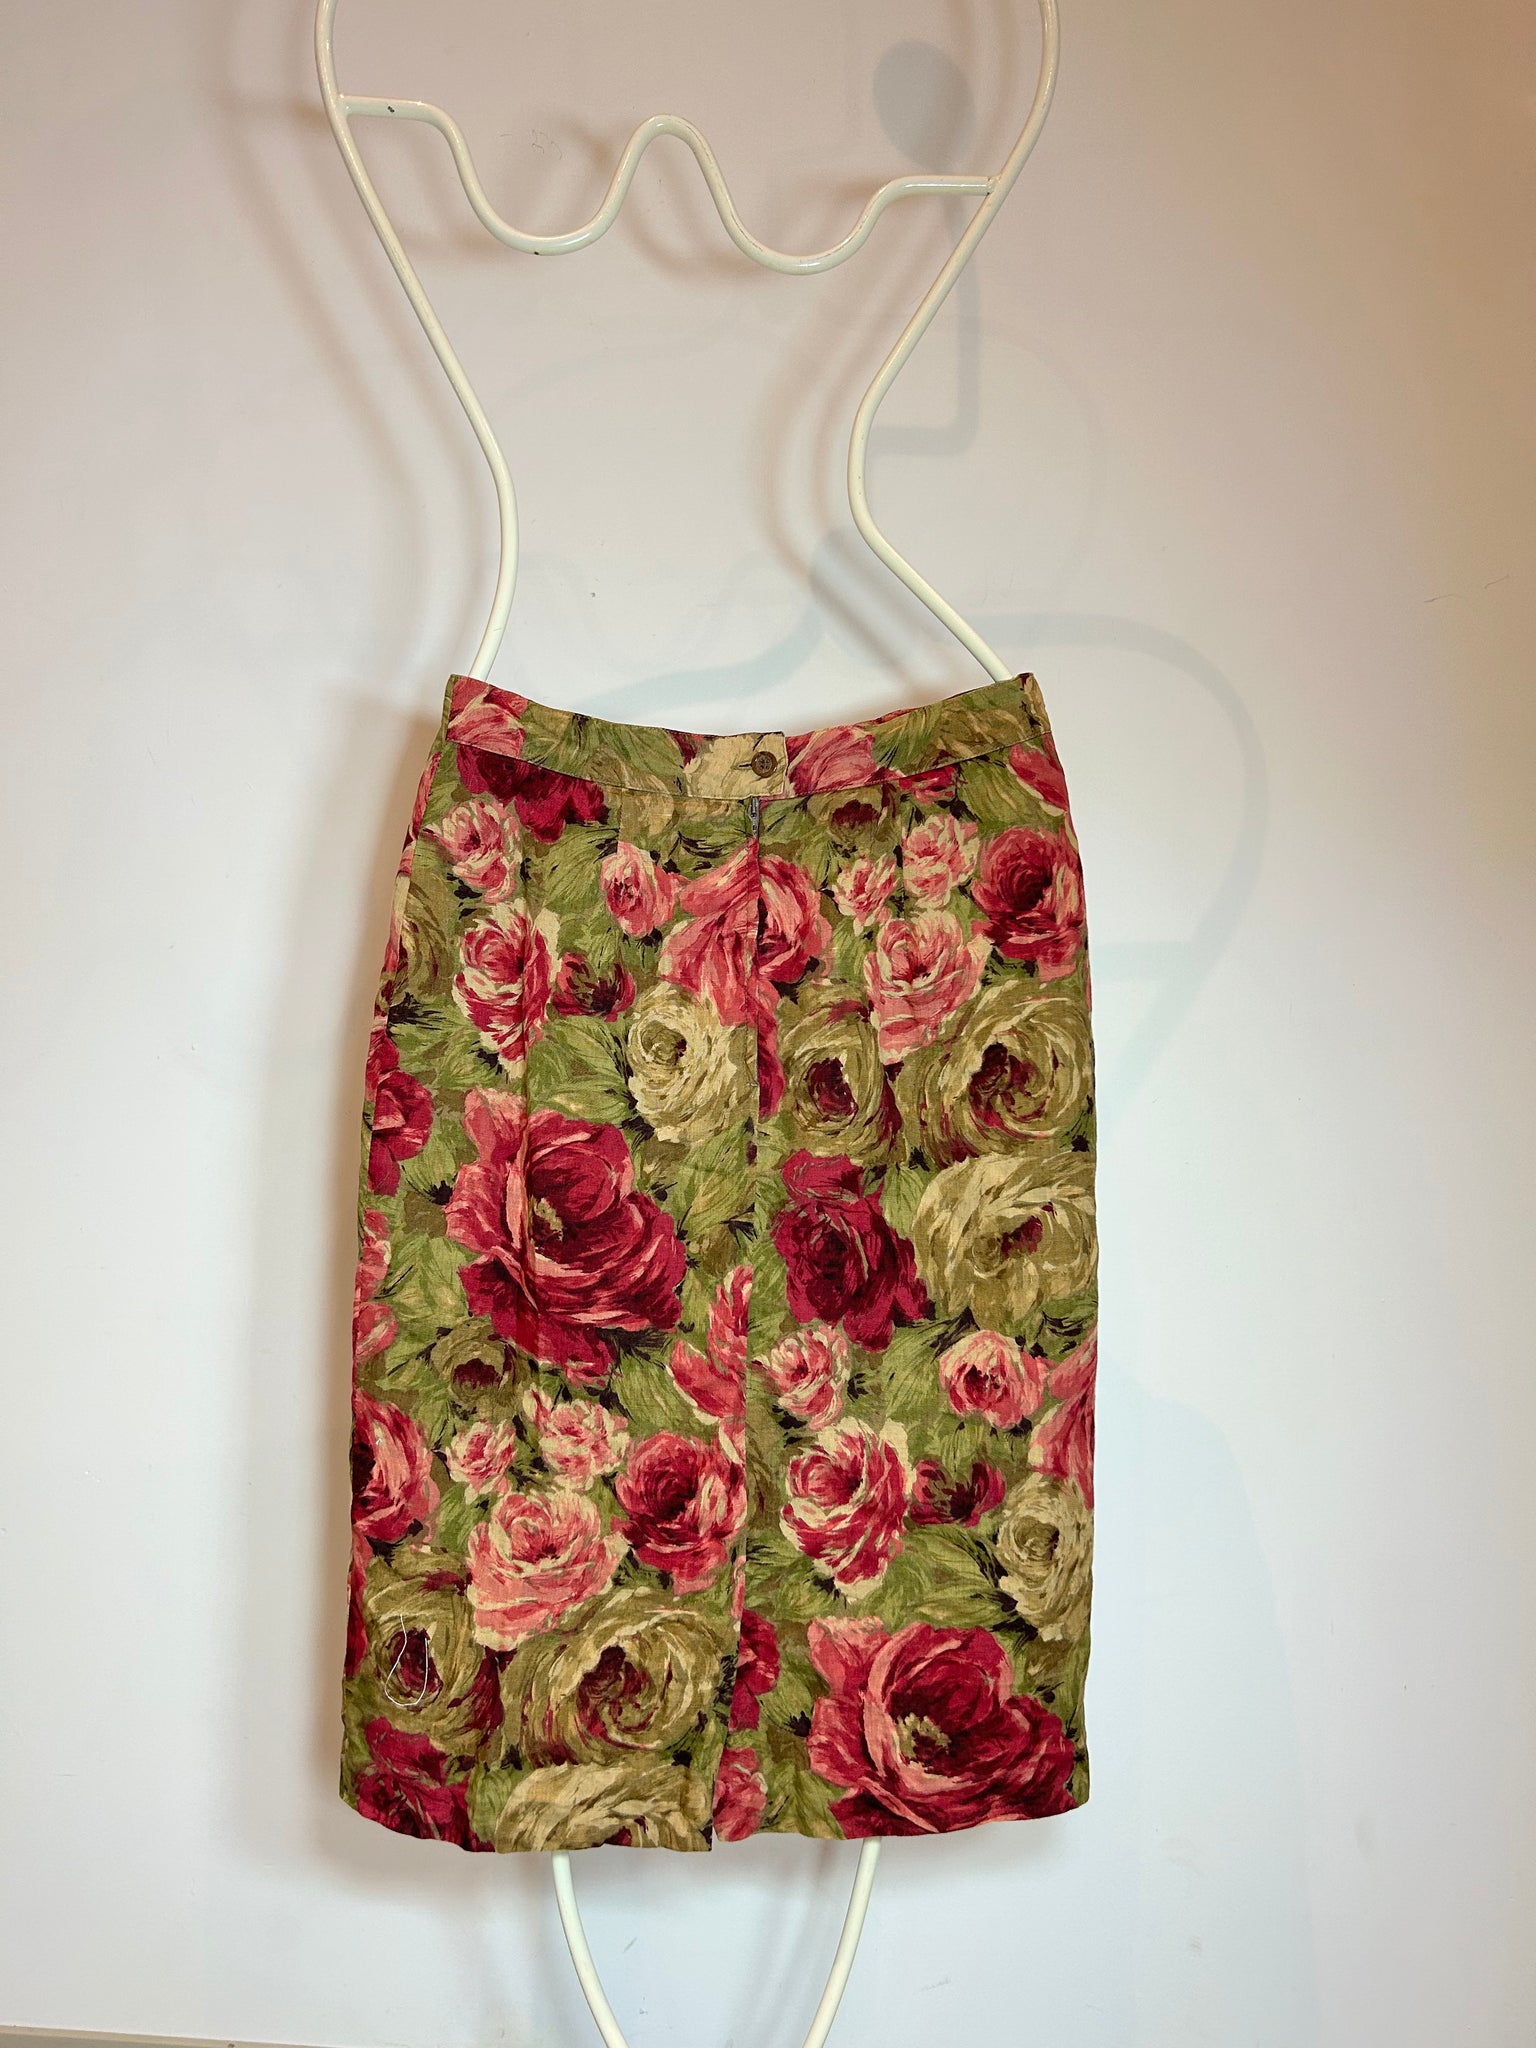 Thrifted vintage & pre-loved skirts & skorts part 1